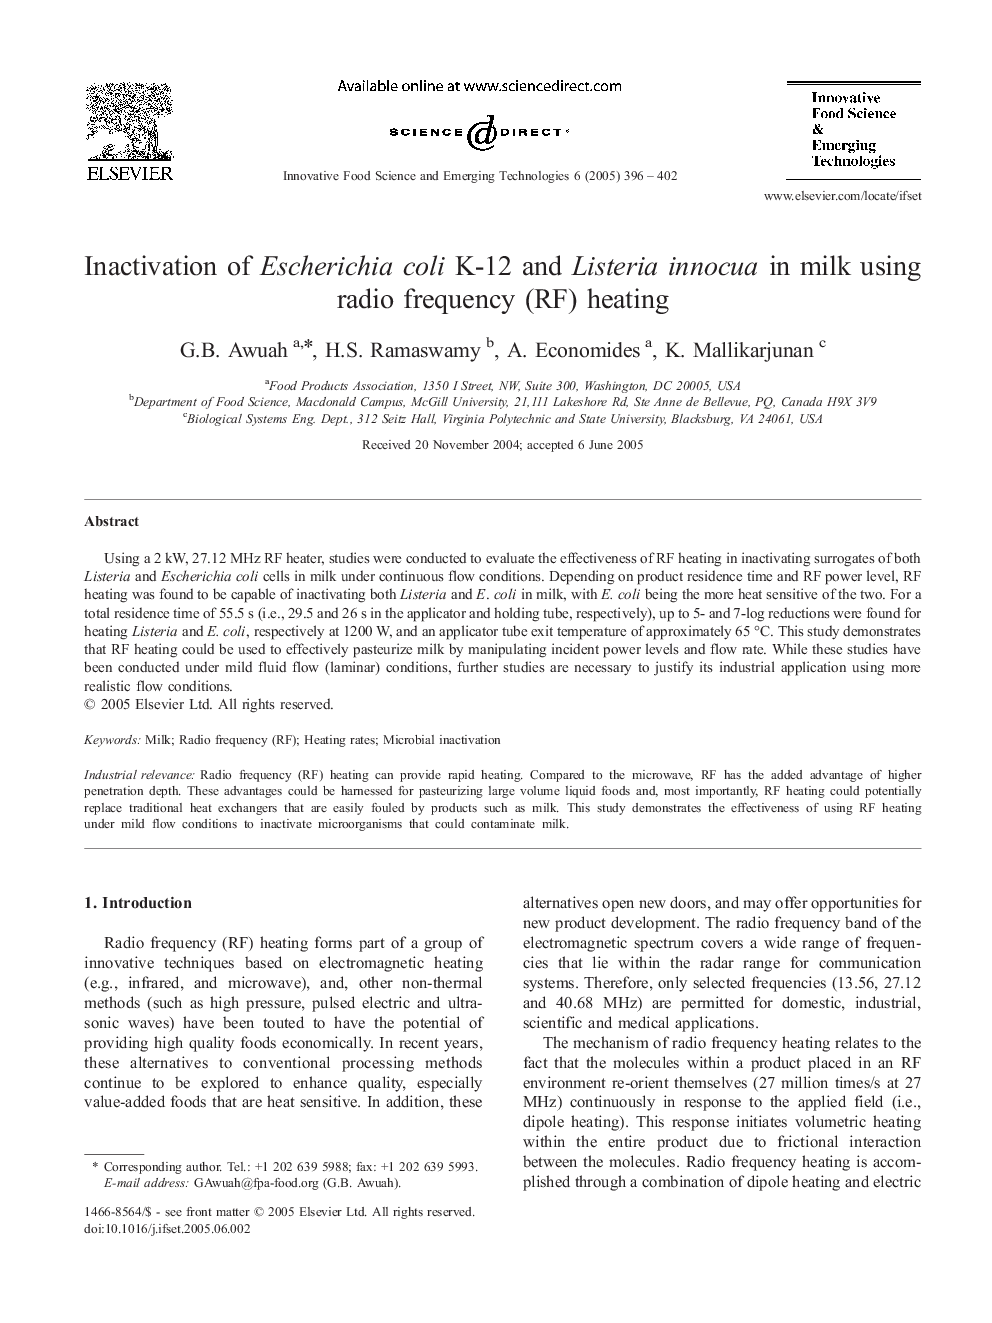 Inactivation of Escherichia coli K-12 and Listeria innocua in milk using radio frequency (RF) heating